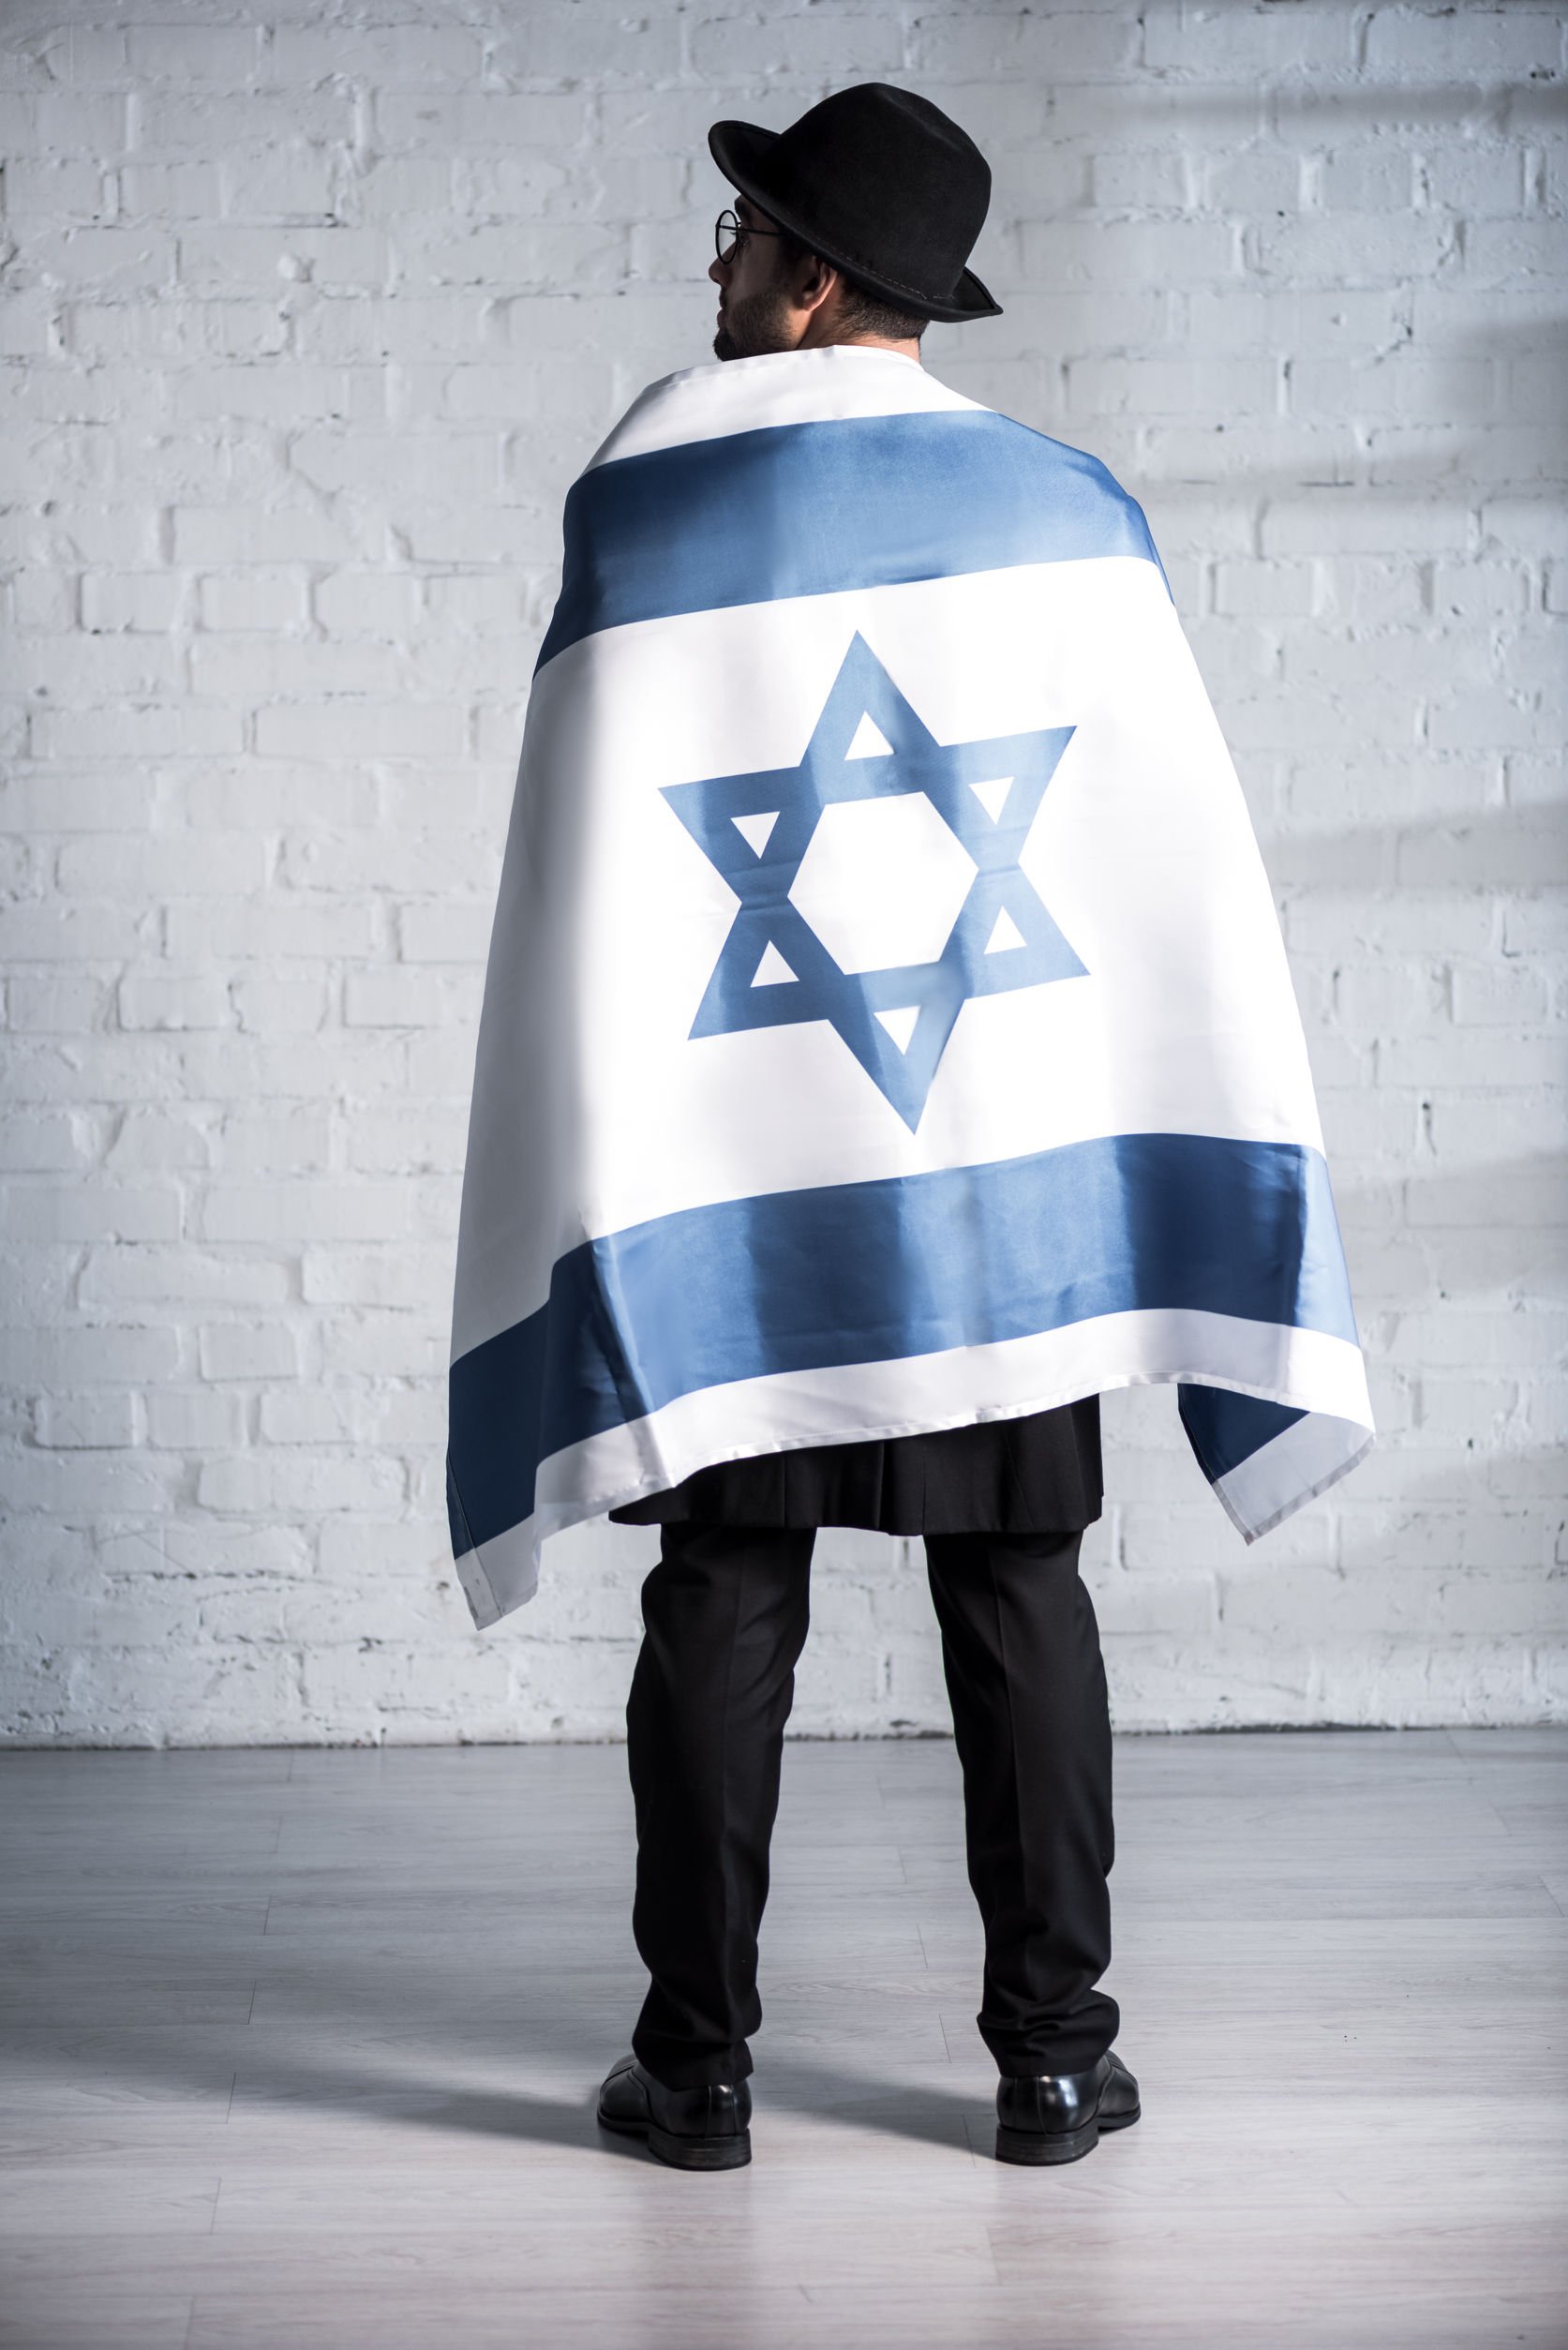 Home judeu segurando bandeira de Israel